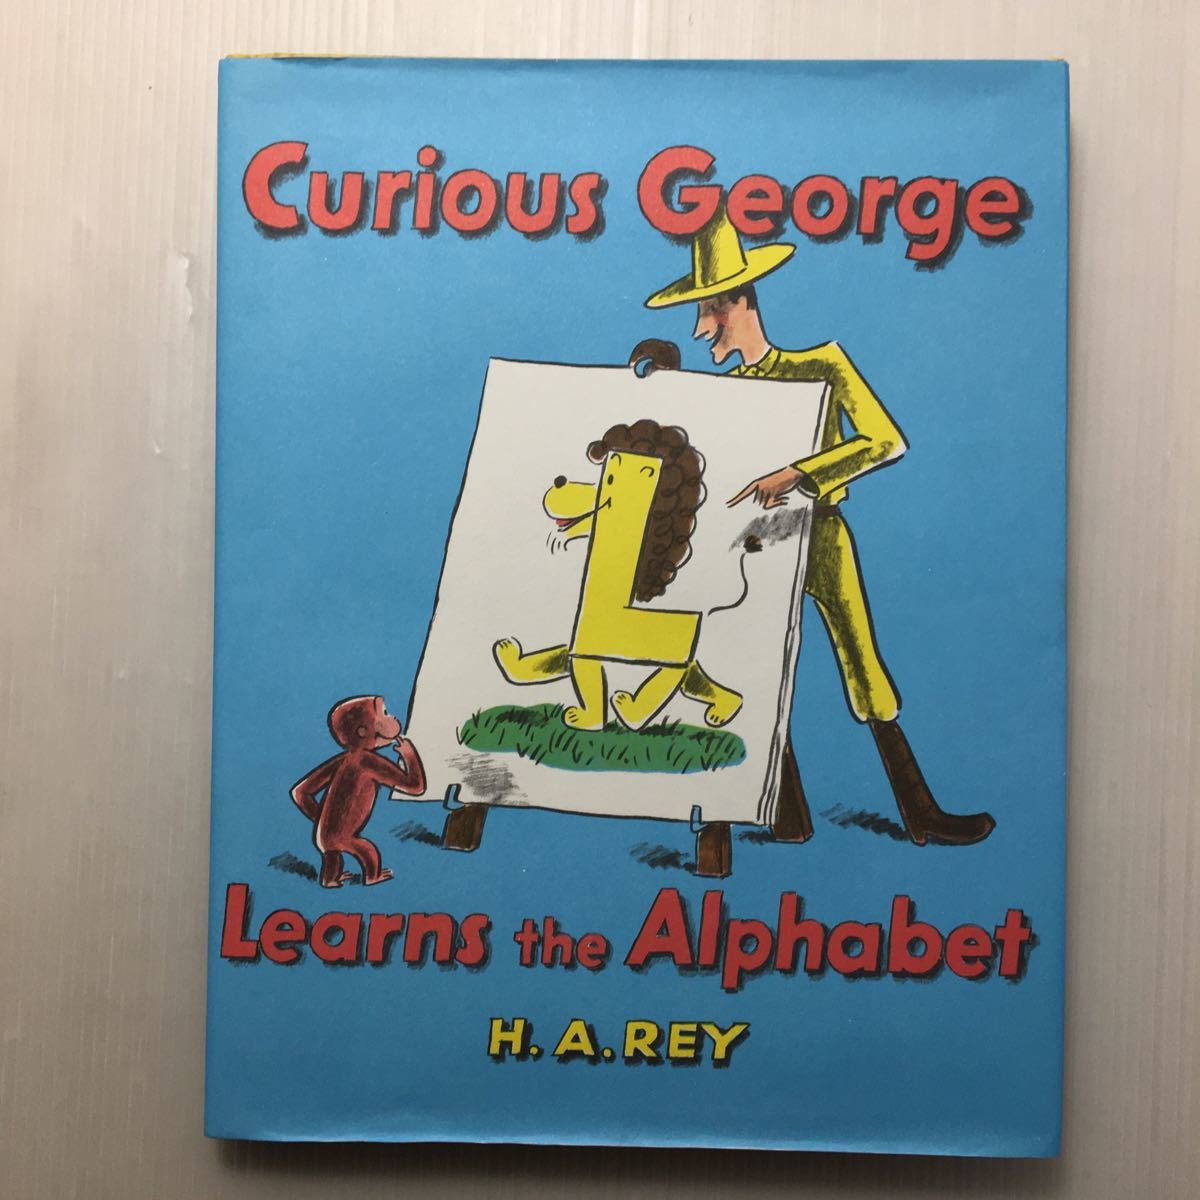 zaa-145♪Curious George Learns the Alphabet (英語) 絵本, 1963/9/9 H. A. Rey (著), Margret Rey (著)_画像1